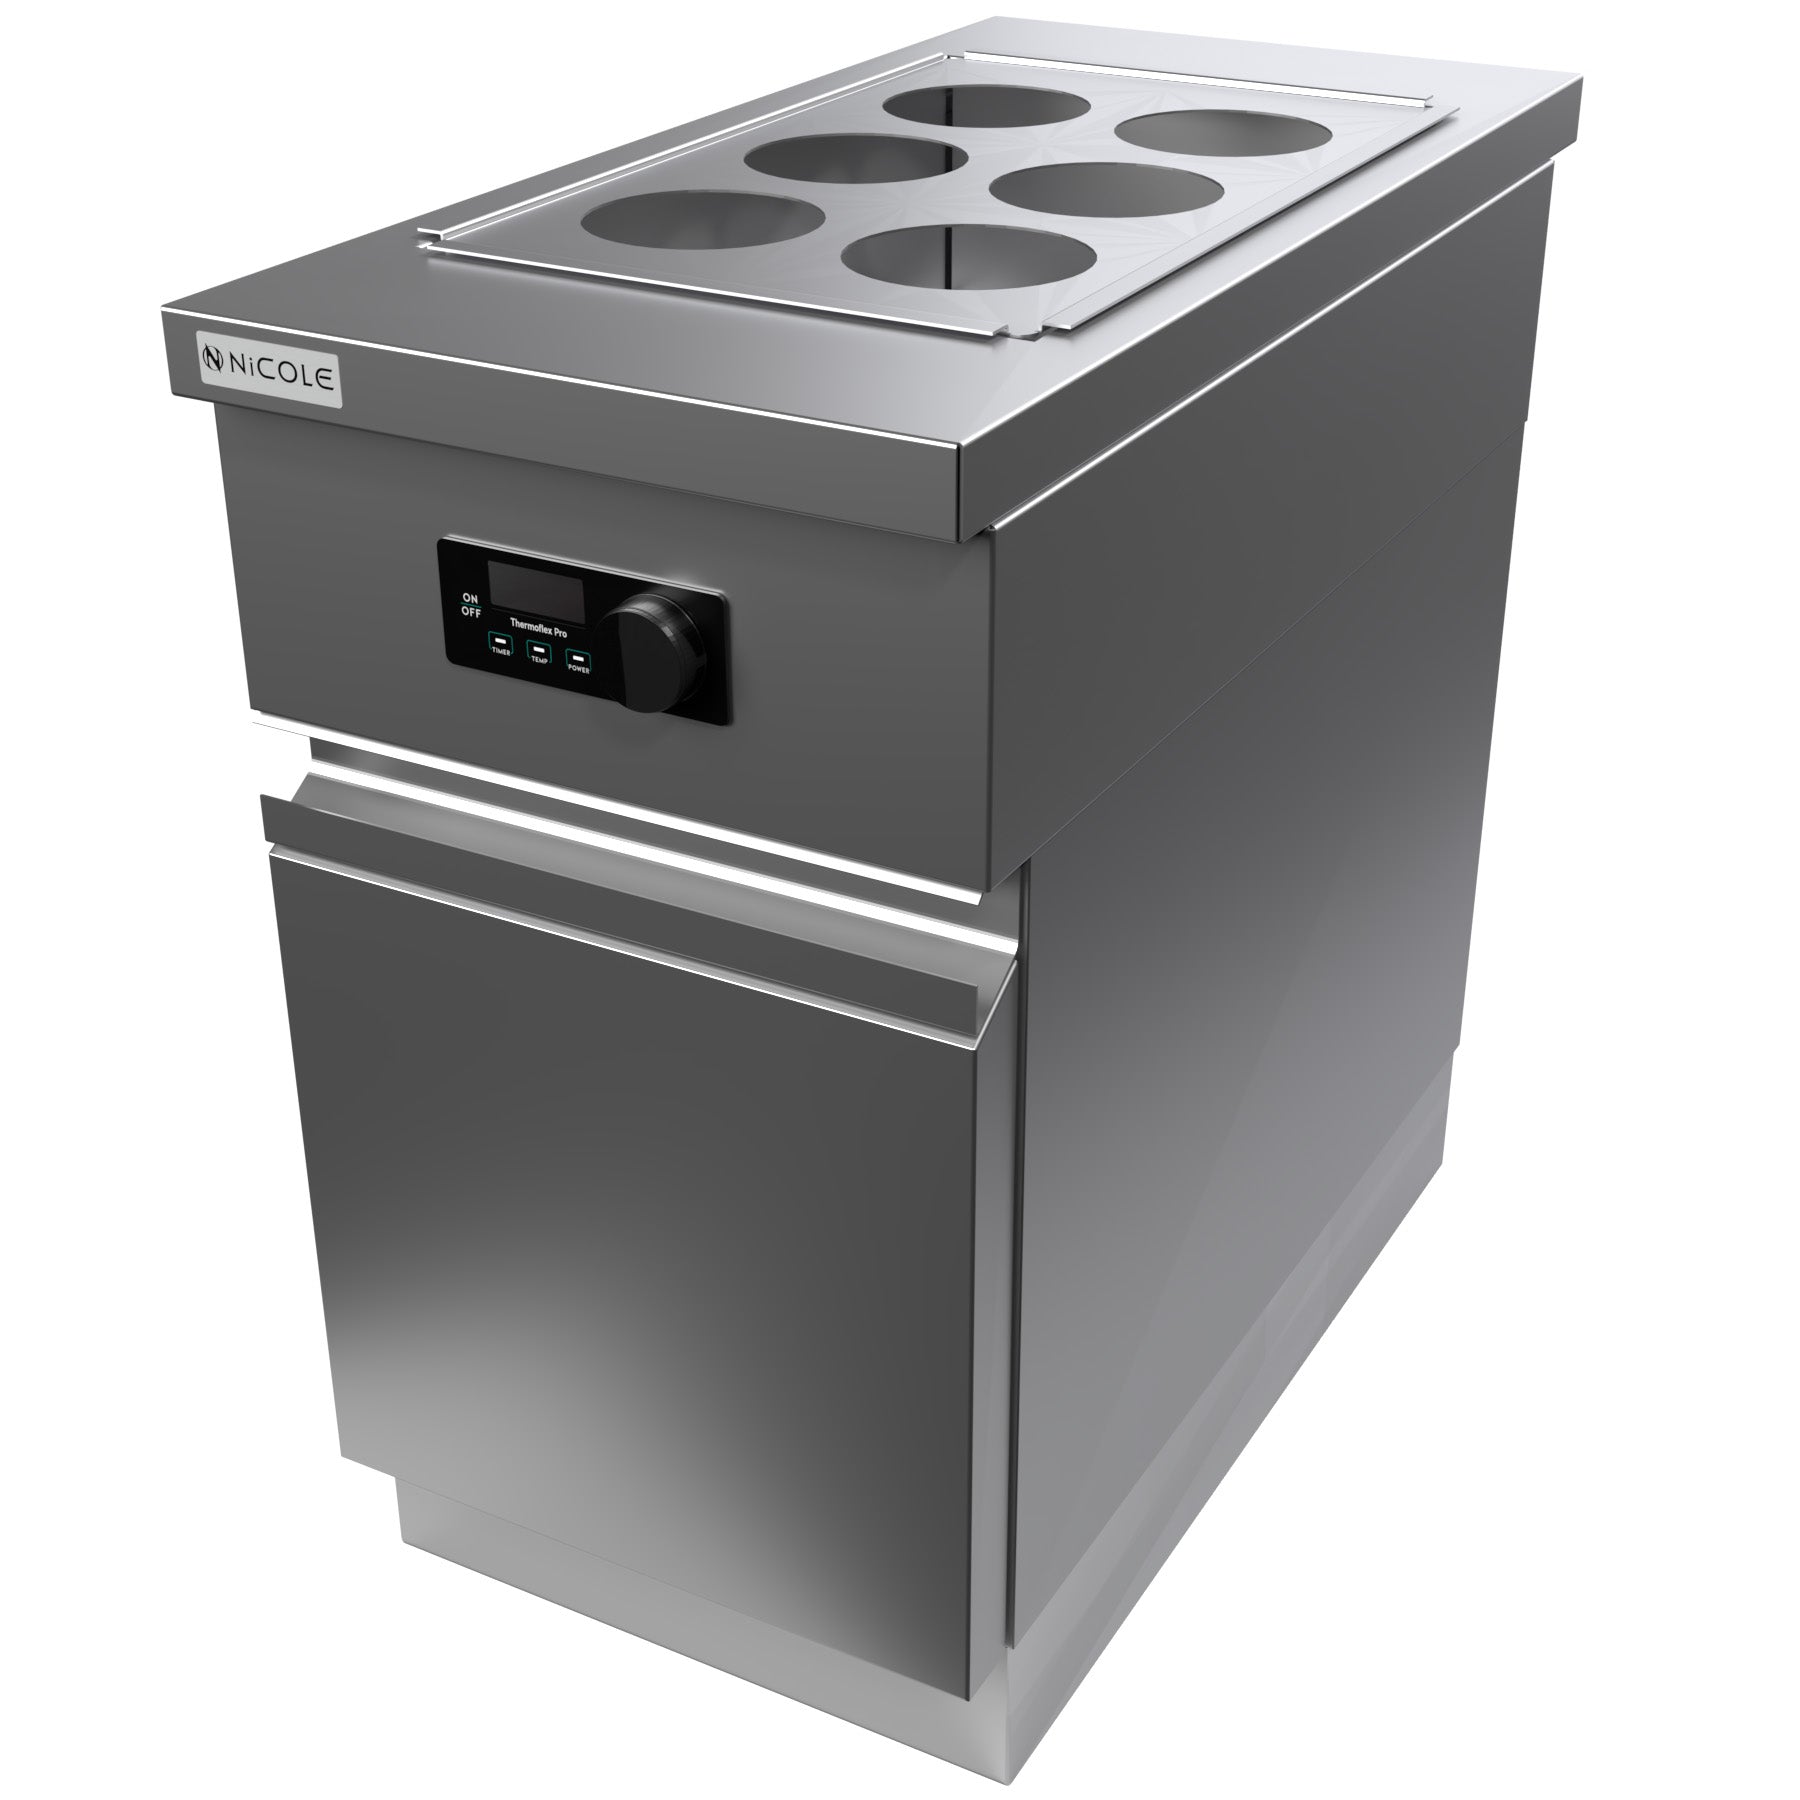 220v 15kw single burner electric cooktop commercial advanced induction  cooker for wok